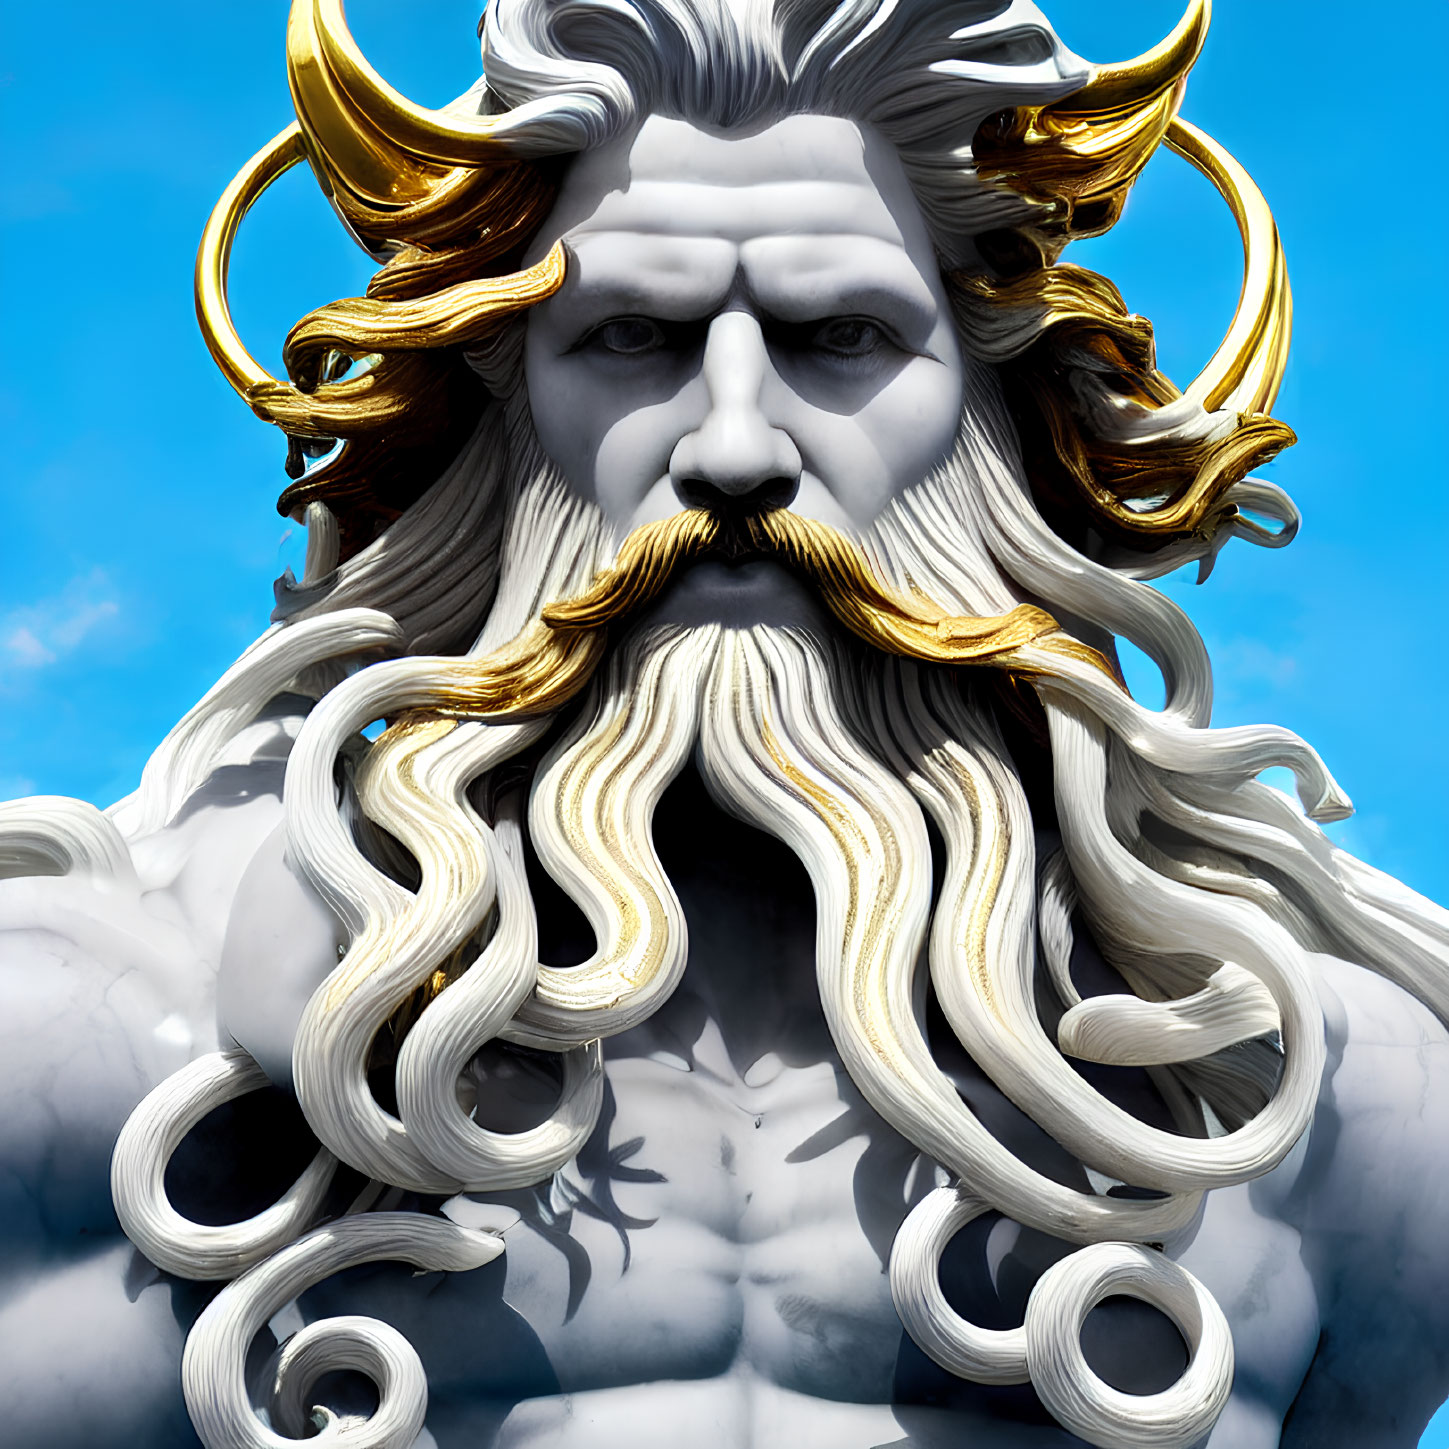 Mythological Greek god Poseidon in 3D with flowing beard and hair